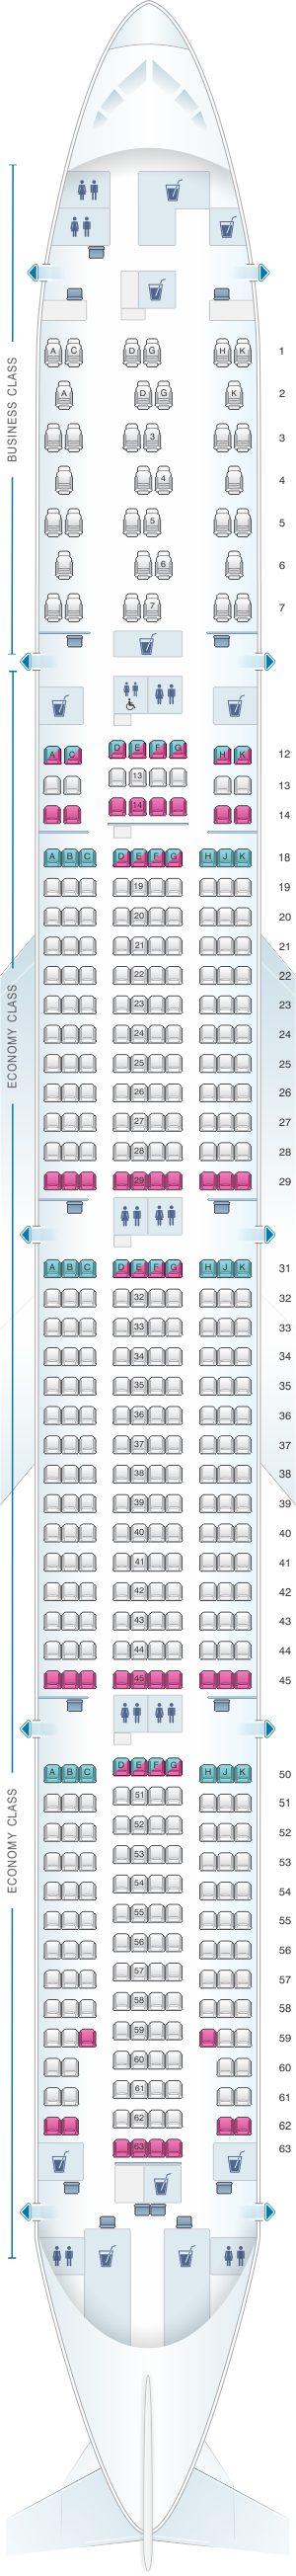 air canada seating 777 300